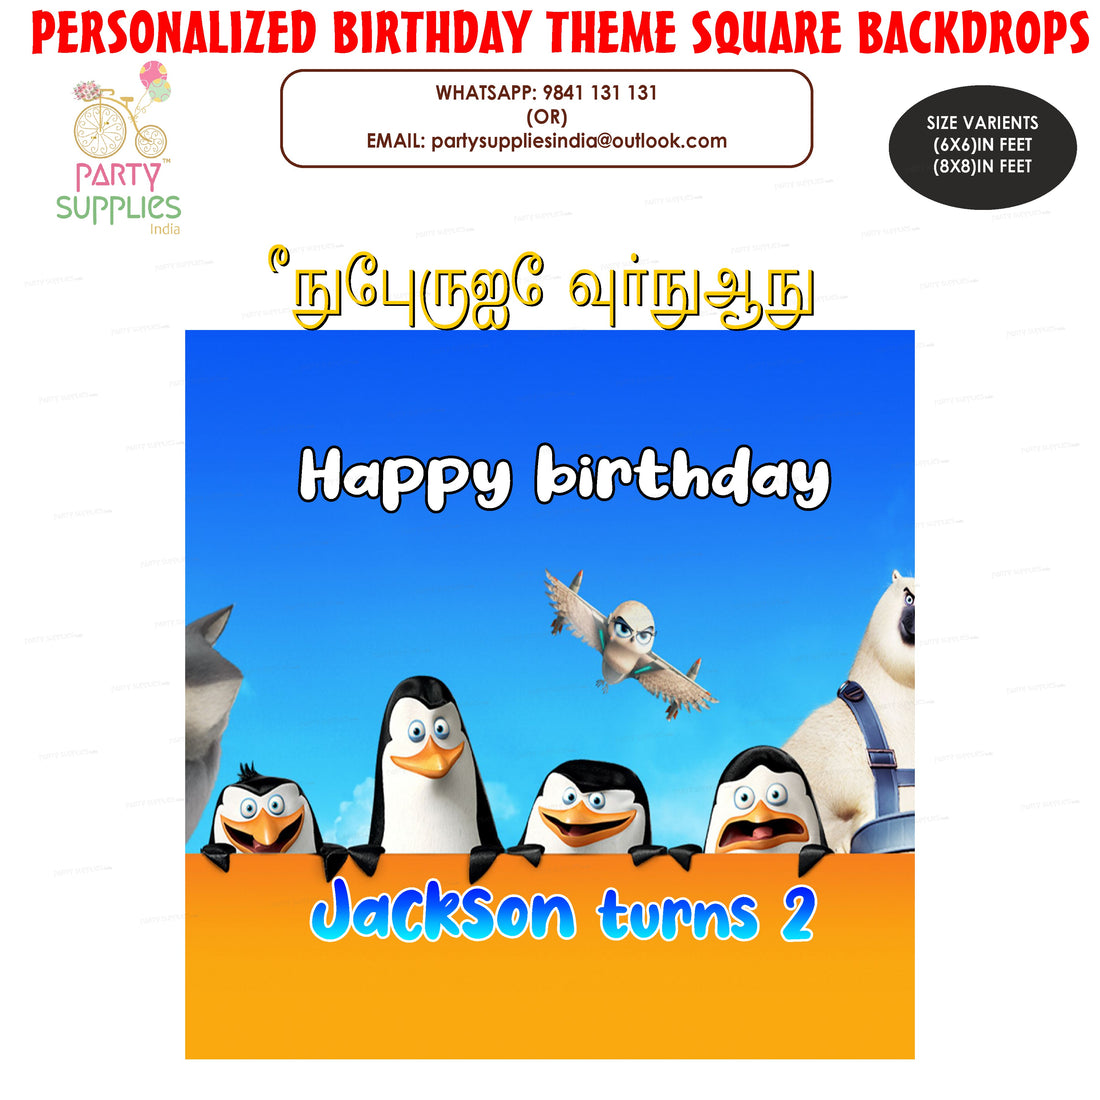 PSI Penguin Personalized Theme Square Backdrop